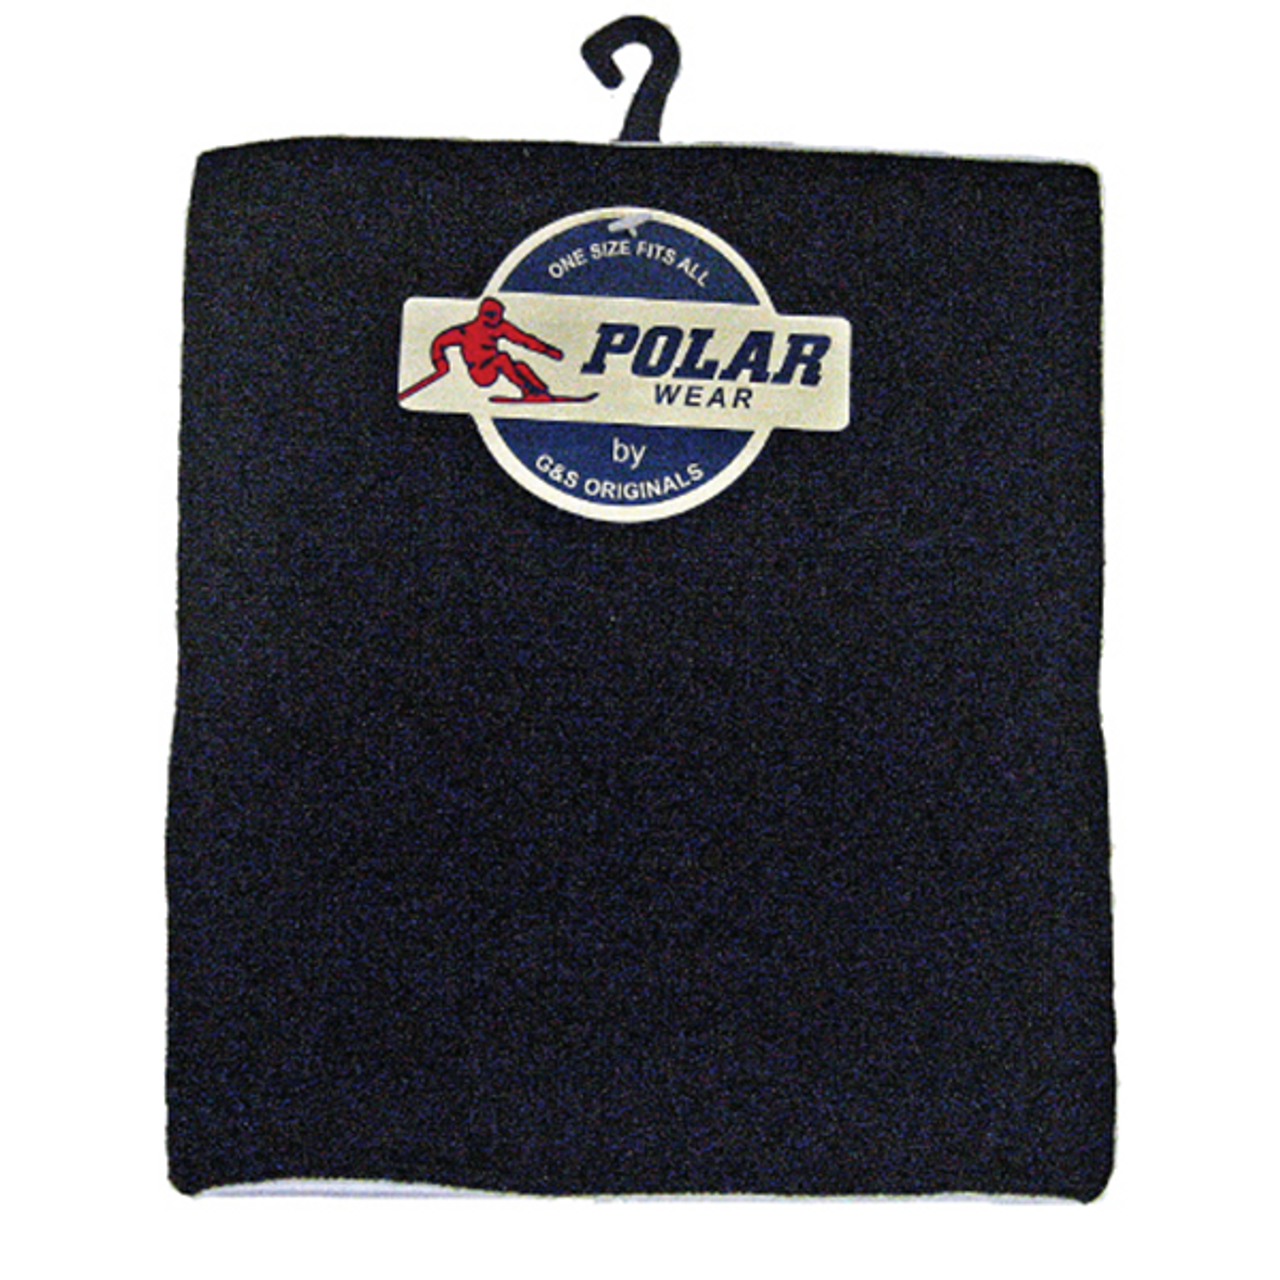 Black Knit Polar Wear Neckwarmer